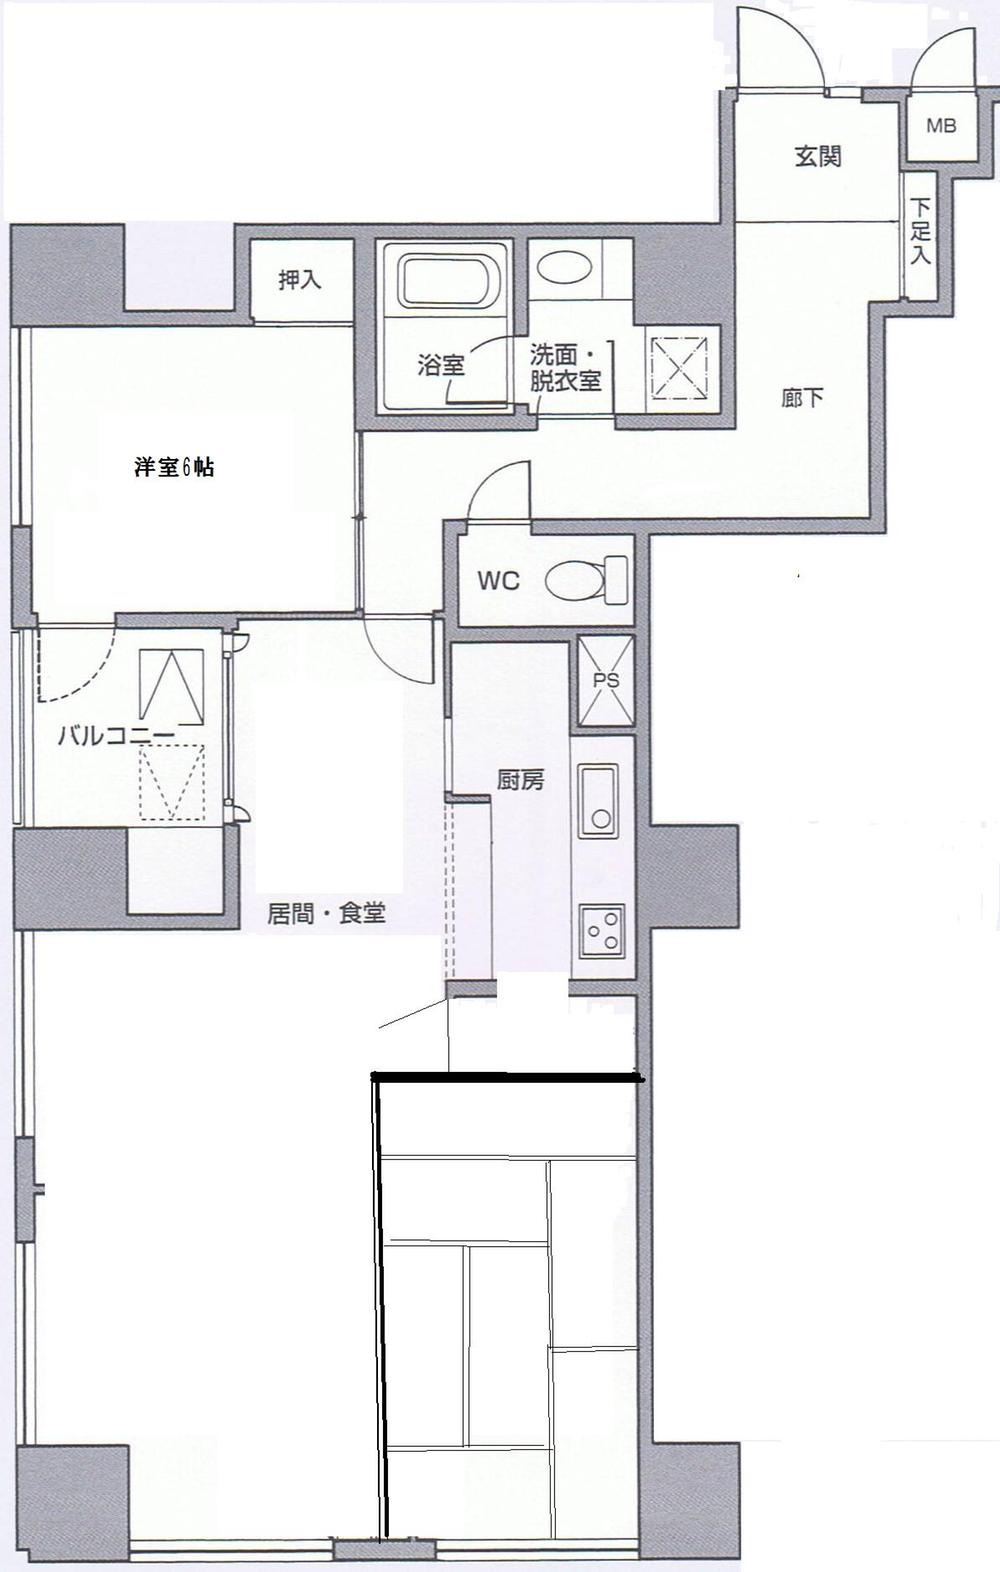 Floor plan. 2LDK, Price 22 million yen, Footprint 83.6 sq m